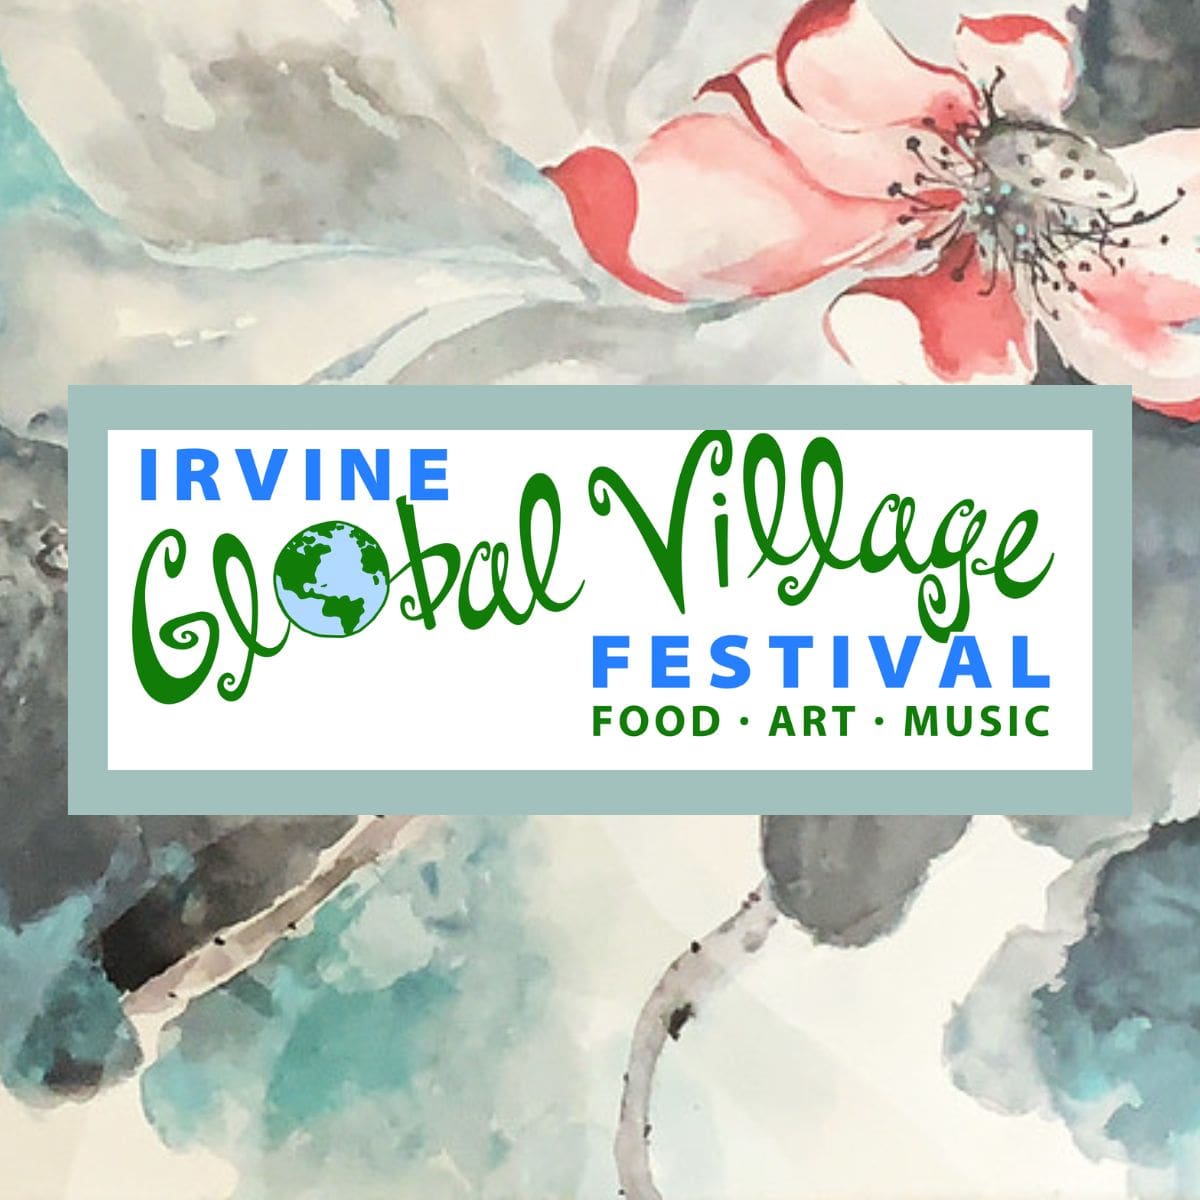 Irvine Global Village Festival